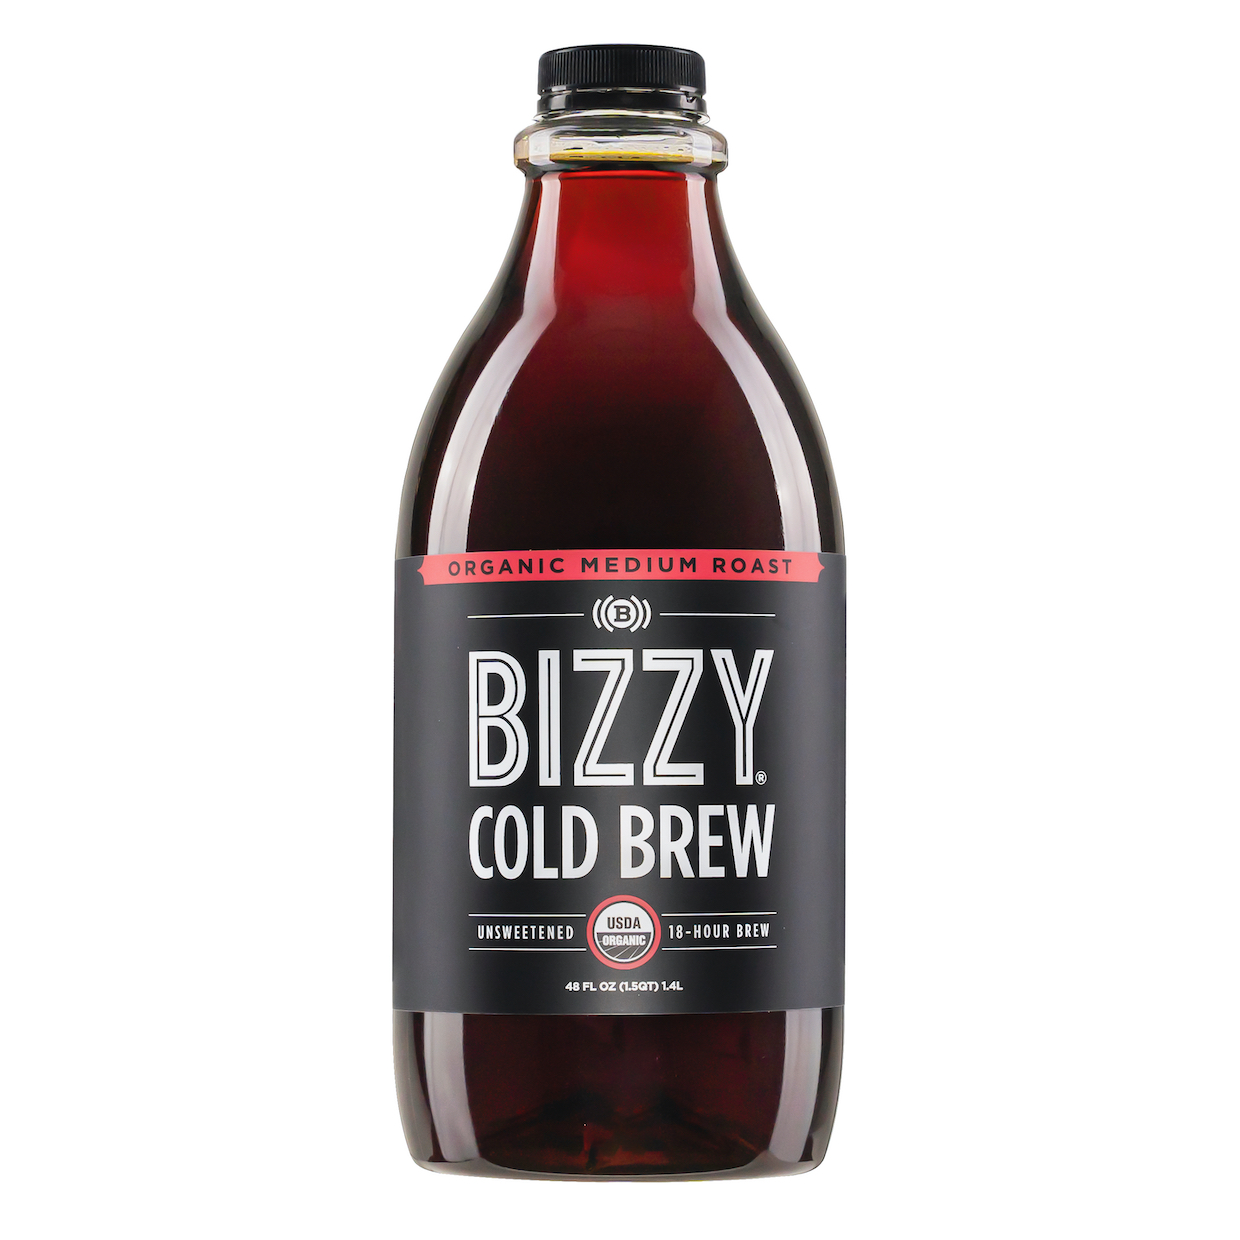 Bizzy cold brew 2